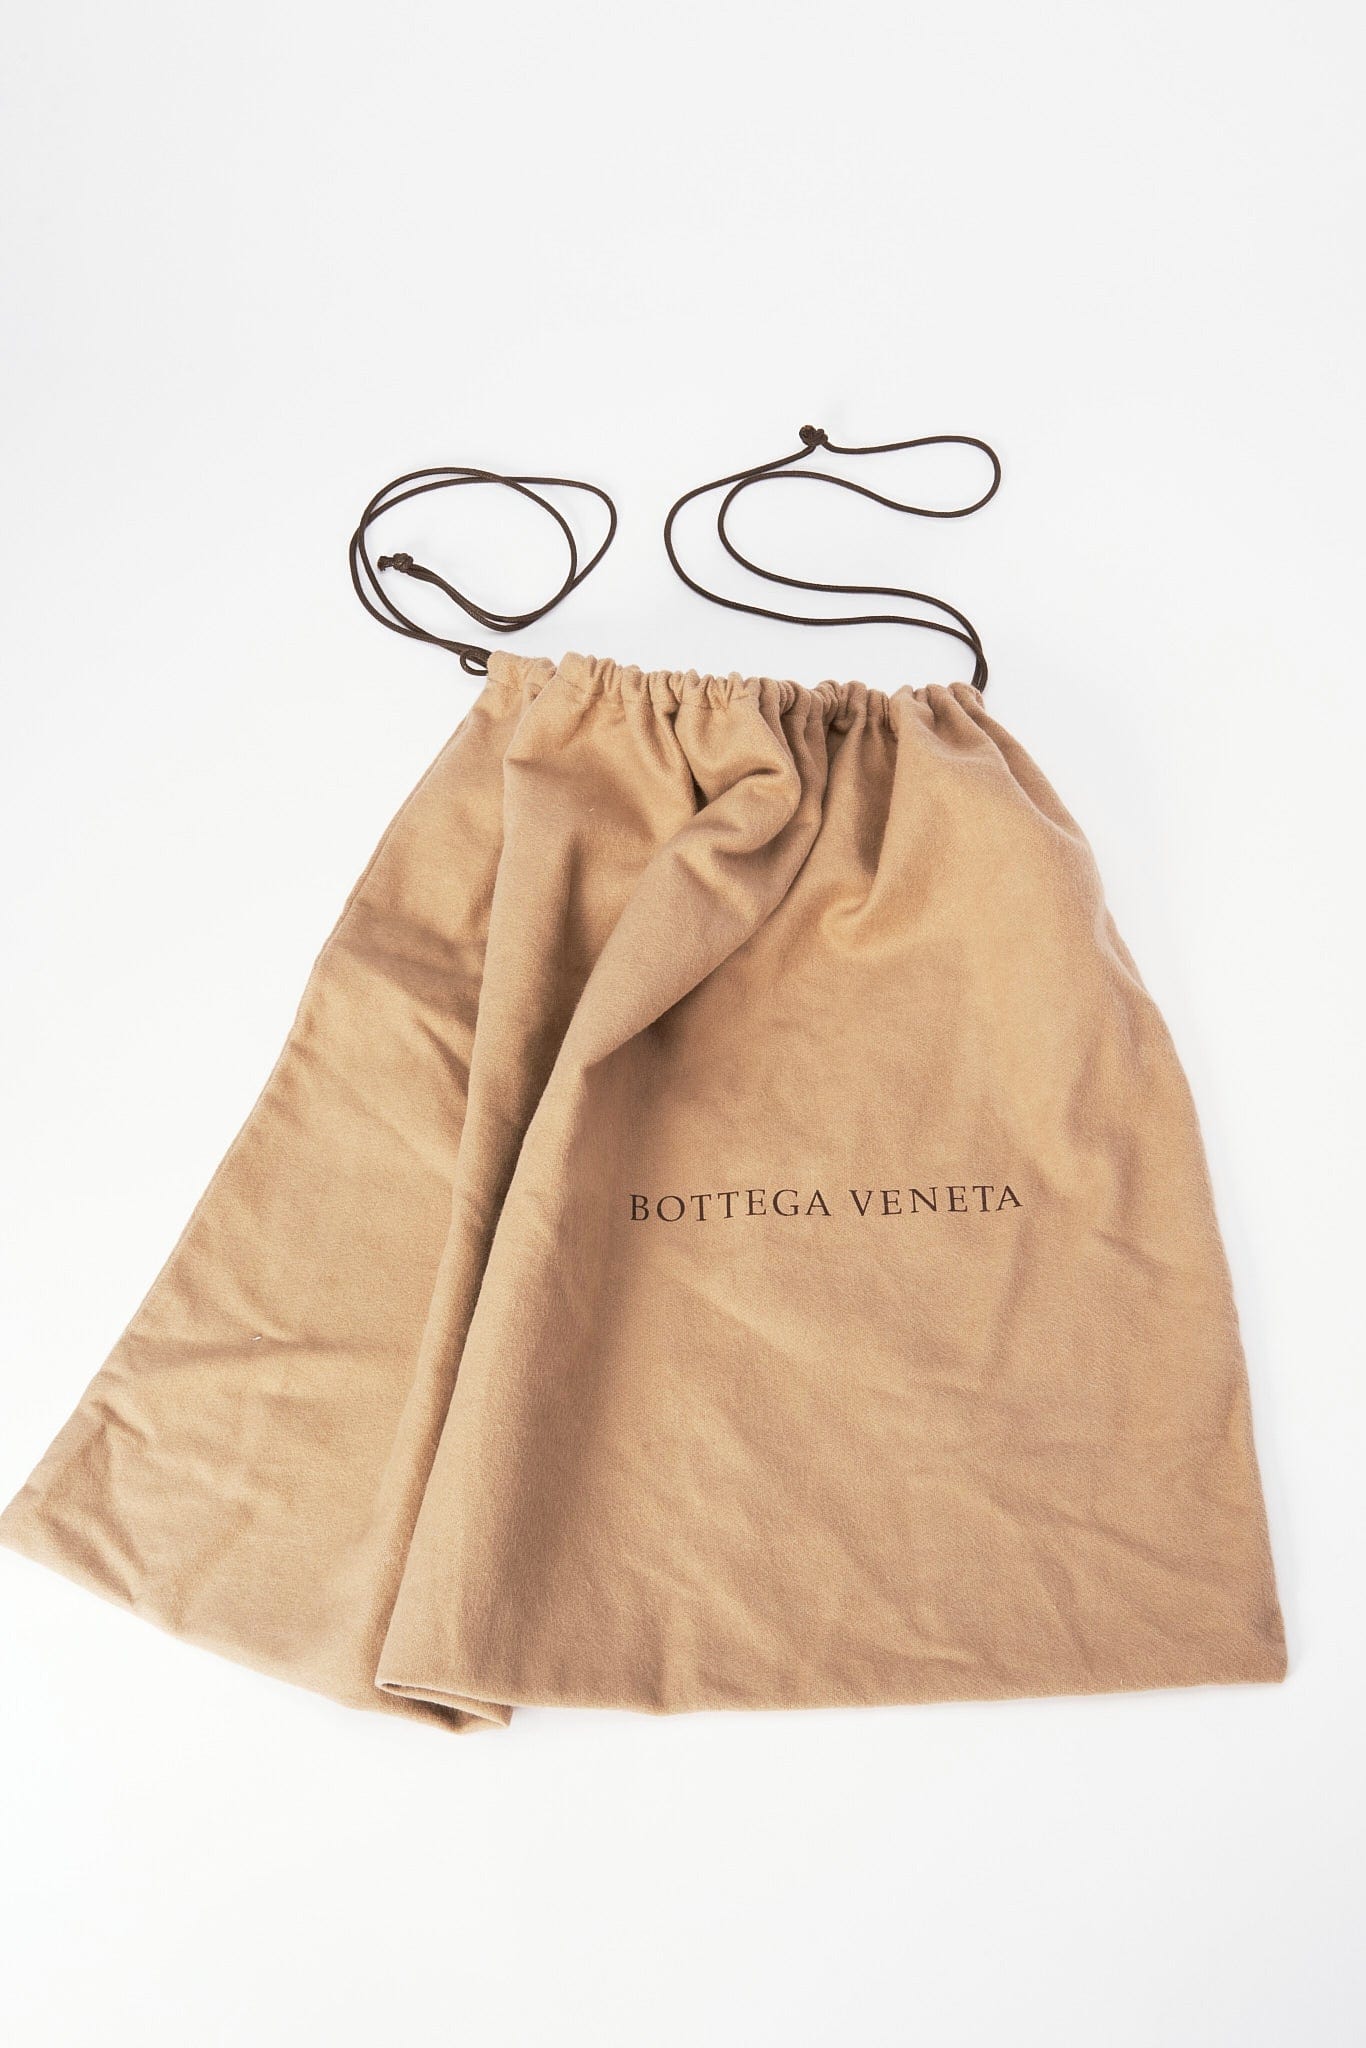 Bottega Veneta Butterfly Leather Tote Bag